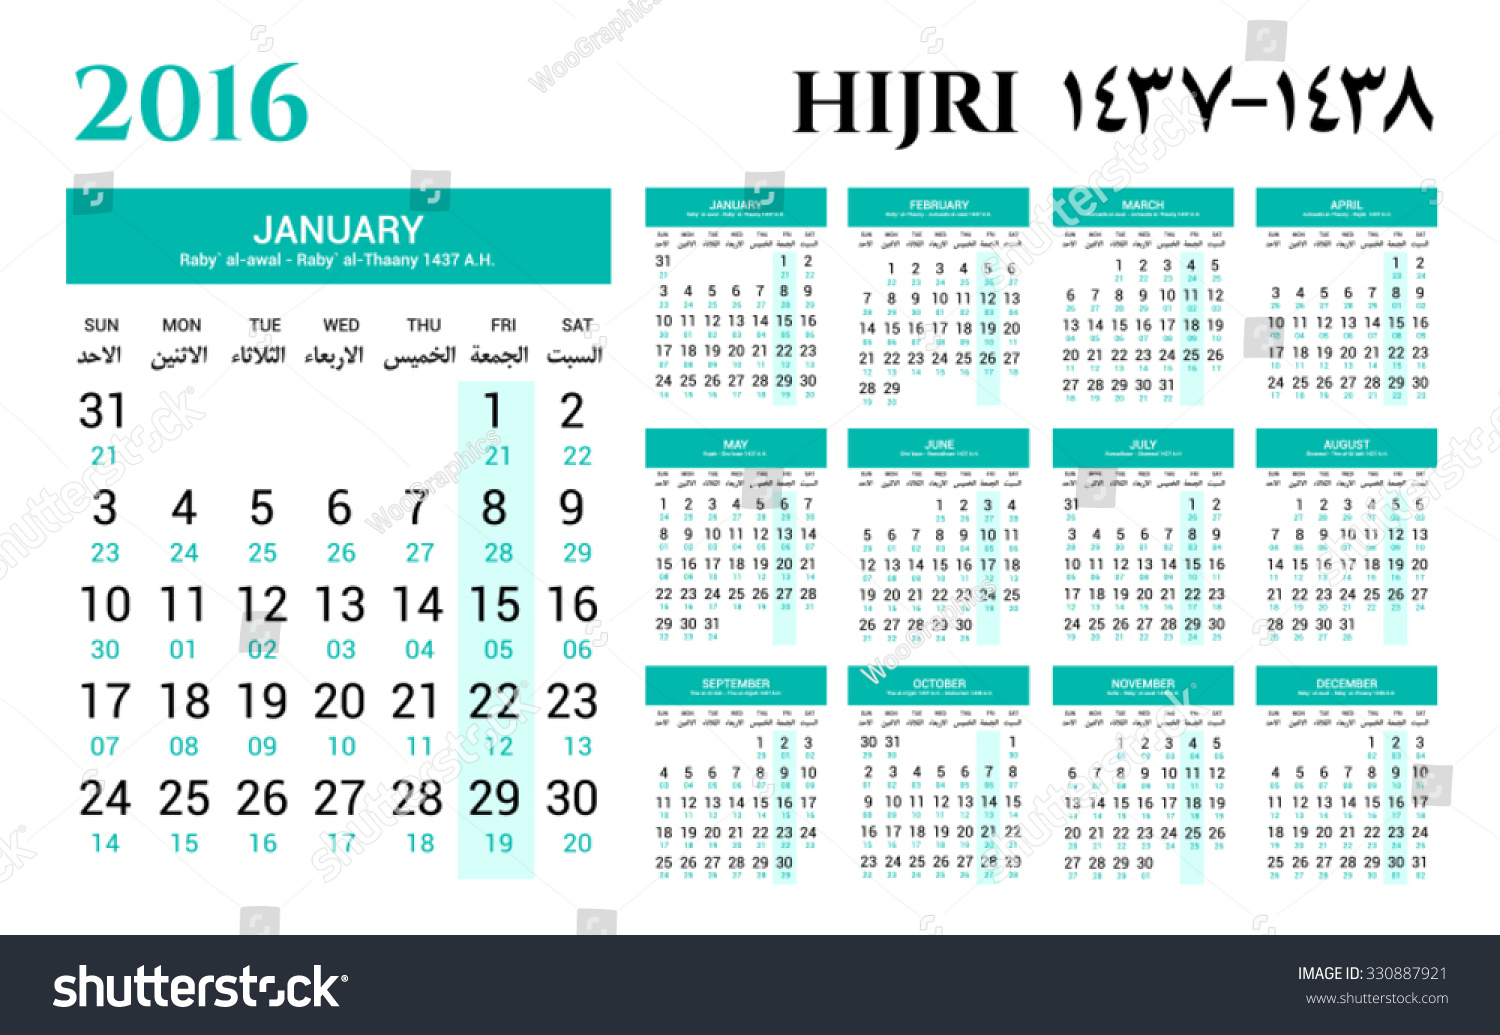 2016-islamic-hijri-calendar-template-design-royalty-free-stock-vector